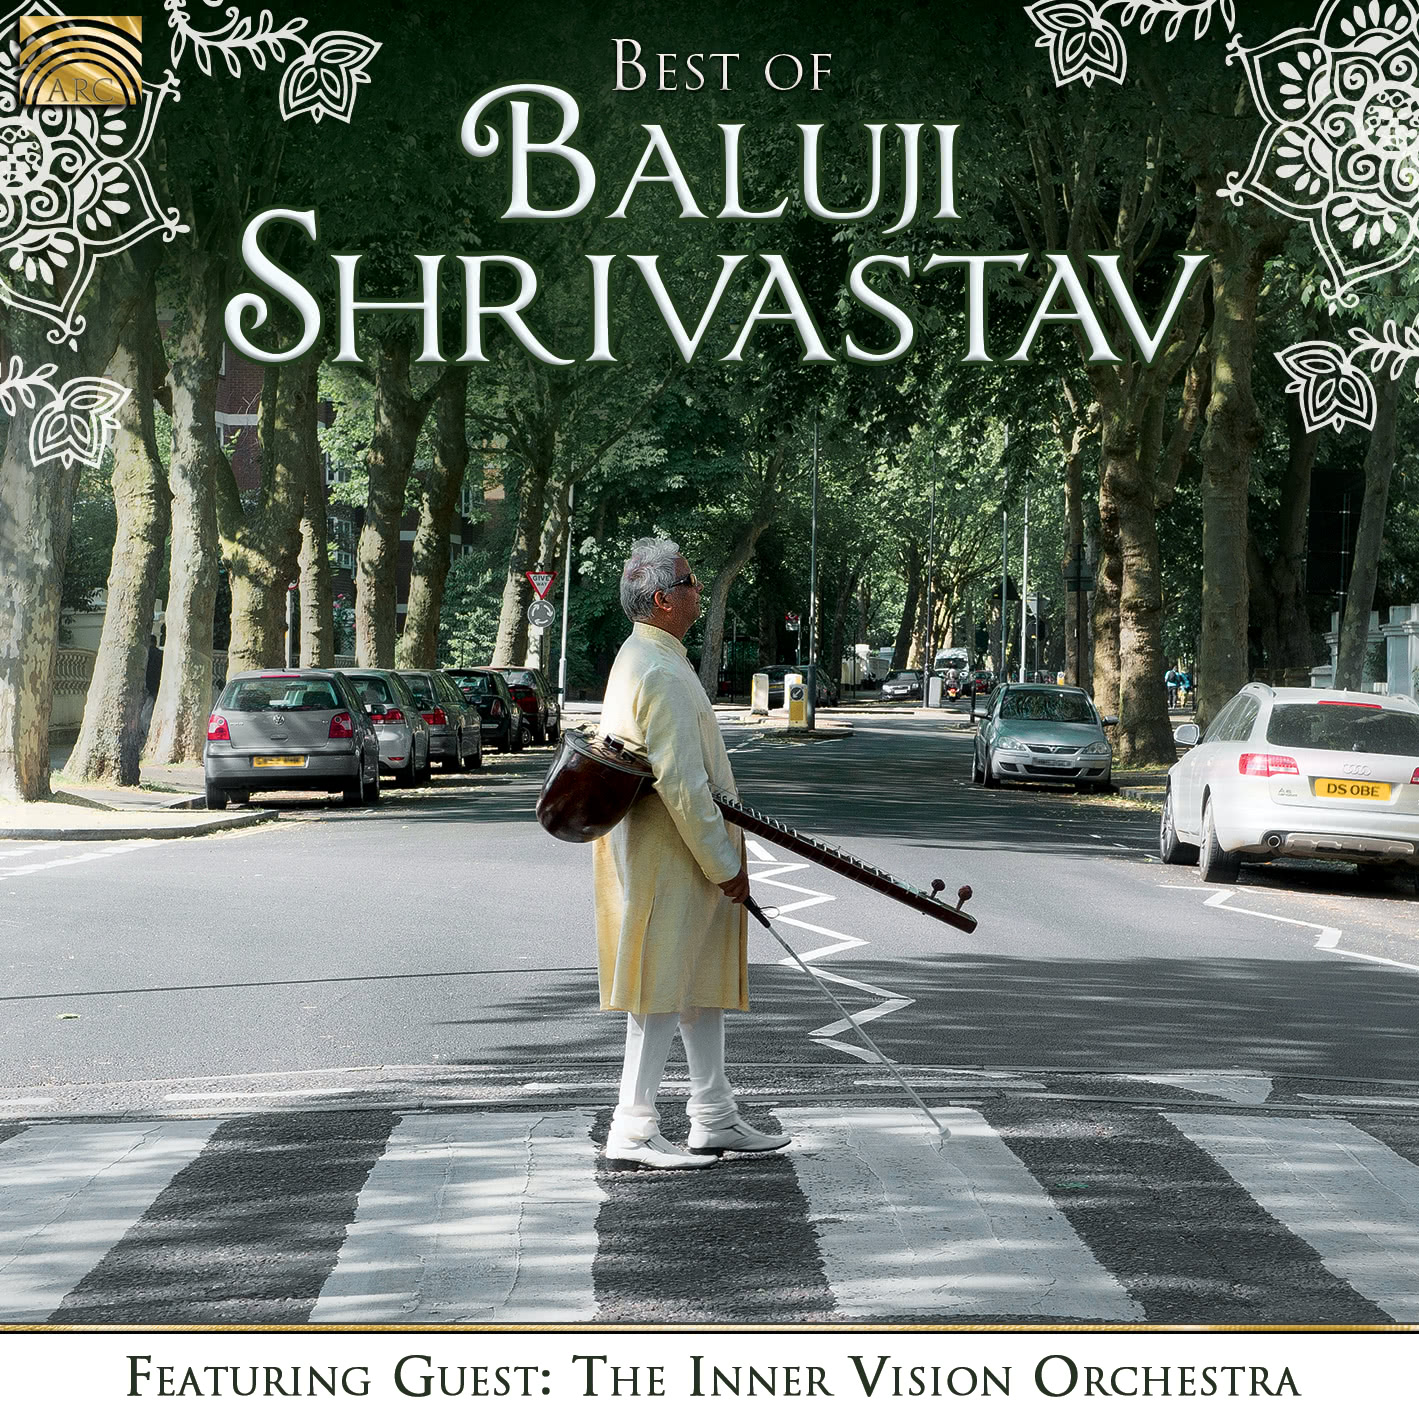 EUCD2695 Best of Baluji Shrivastav - Featuring Guest: The Inner Vision Orchestra